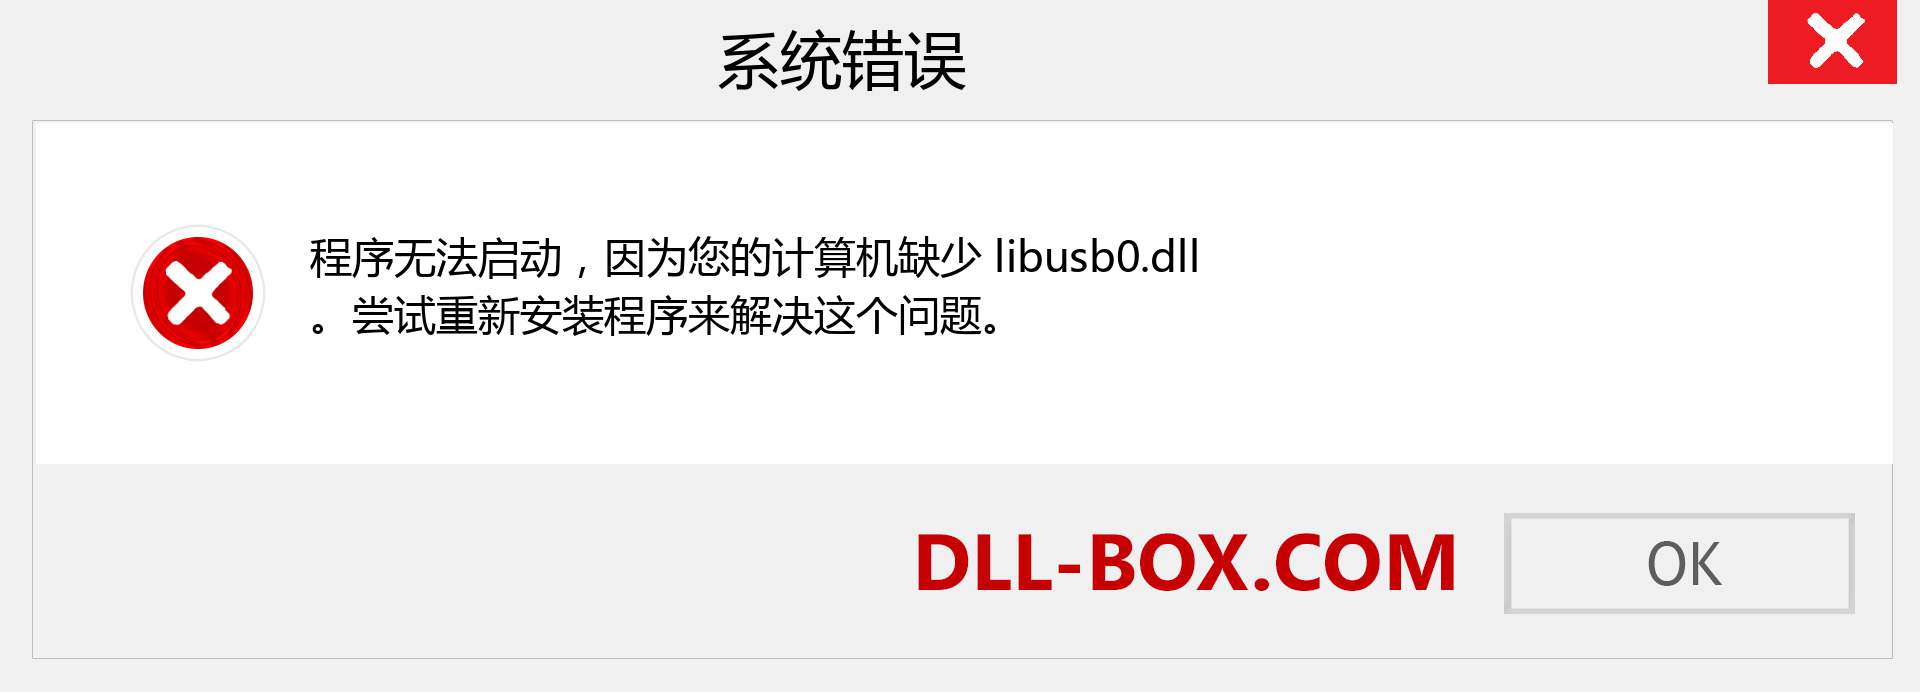 libusb0.dll 文件丢失？。 适用于 Windows 7、8、10 的下载 - 修复 Windows、照片、图像上的 libusb0 dll 丢失错误